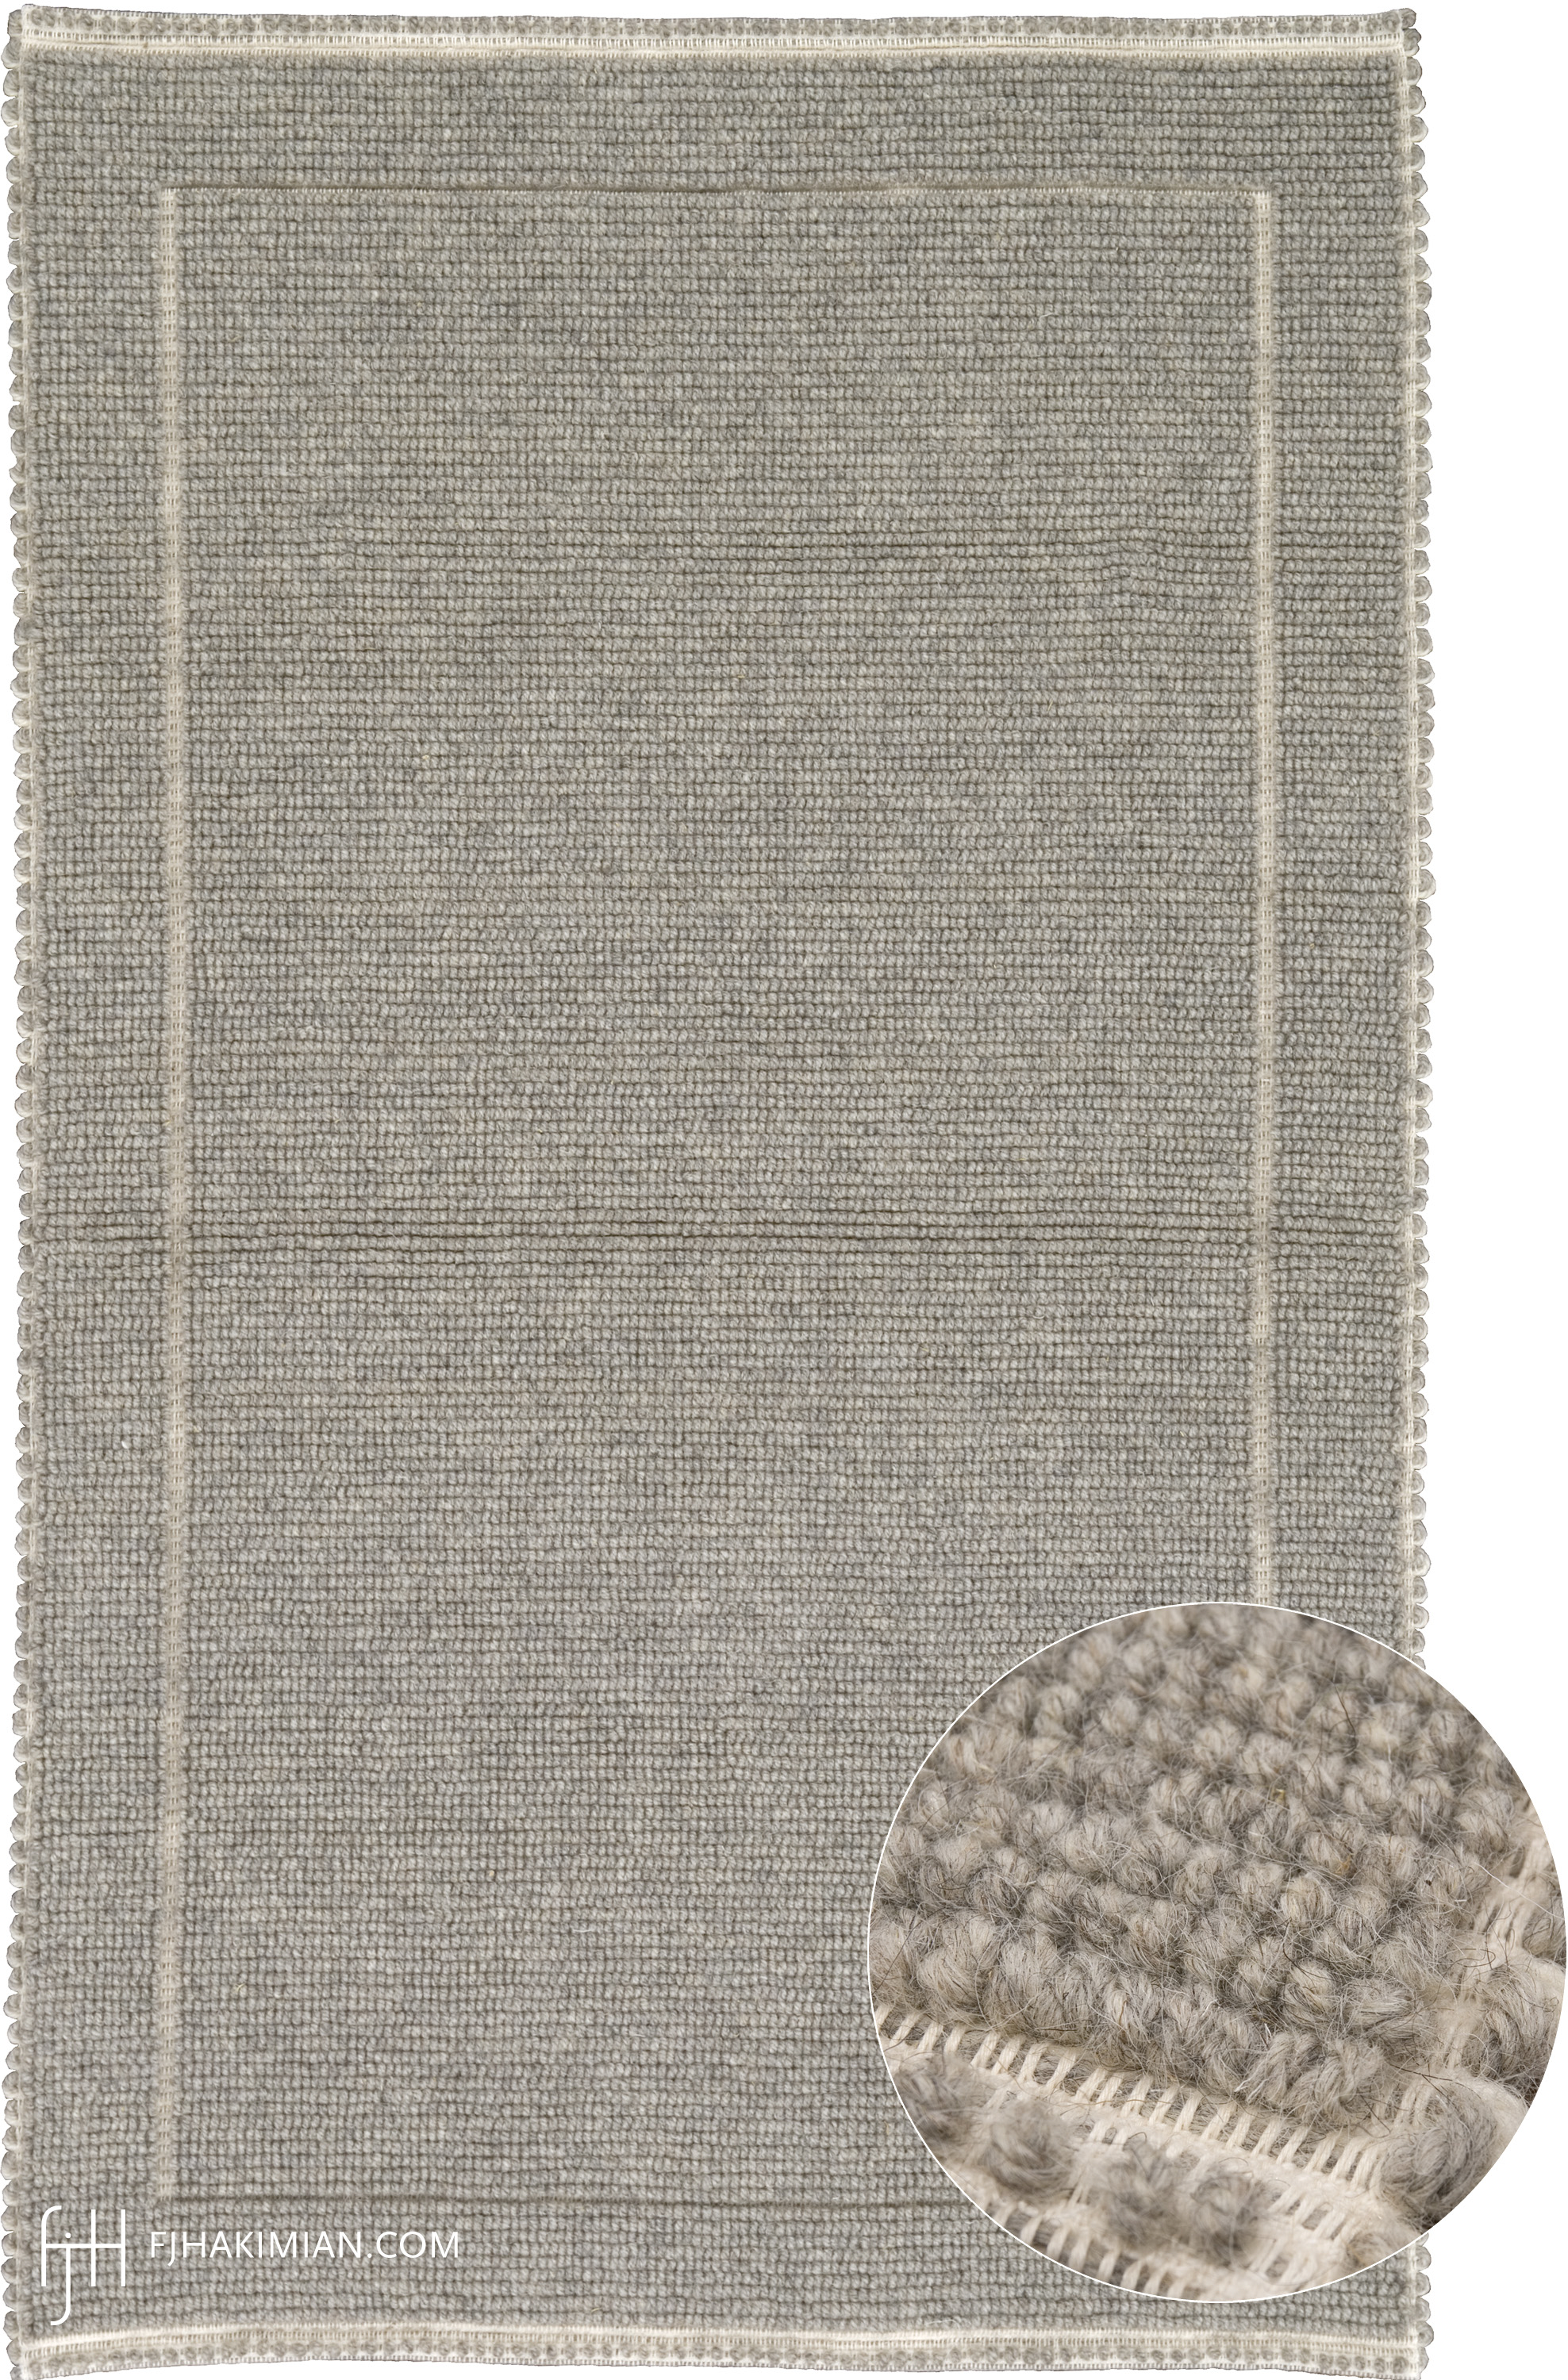 25383 | Custom Sardinian Carpet | FJ Hakimian | Carpet Gallery in NYC